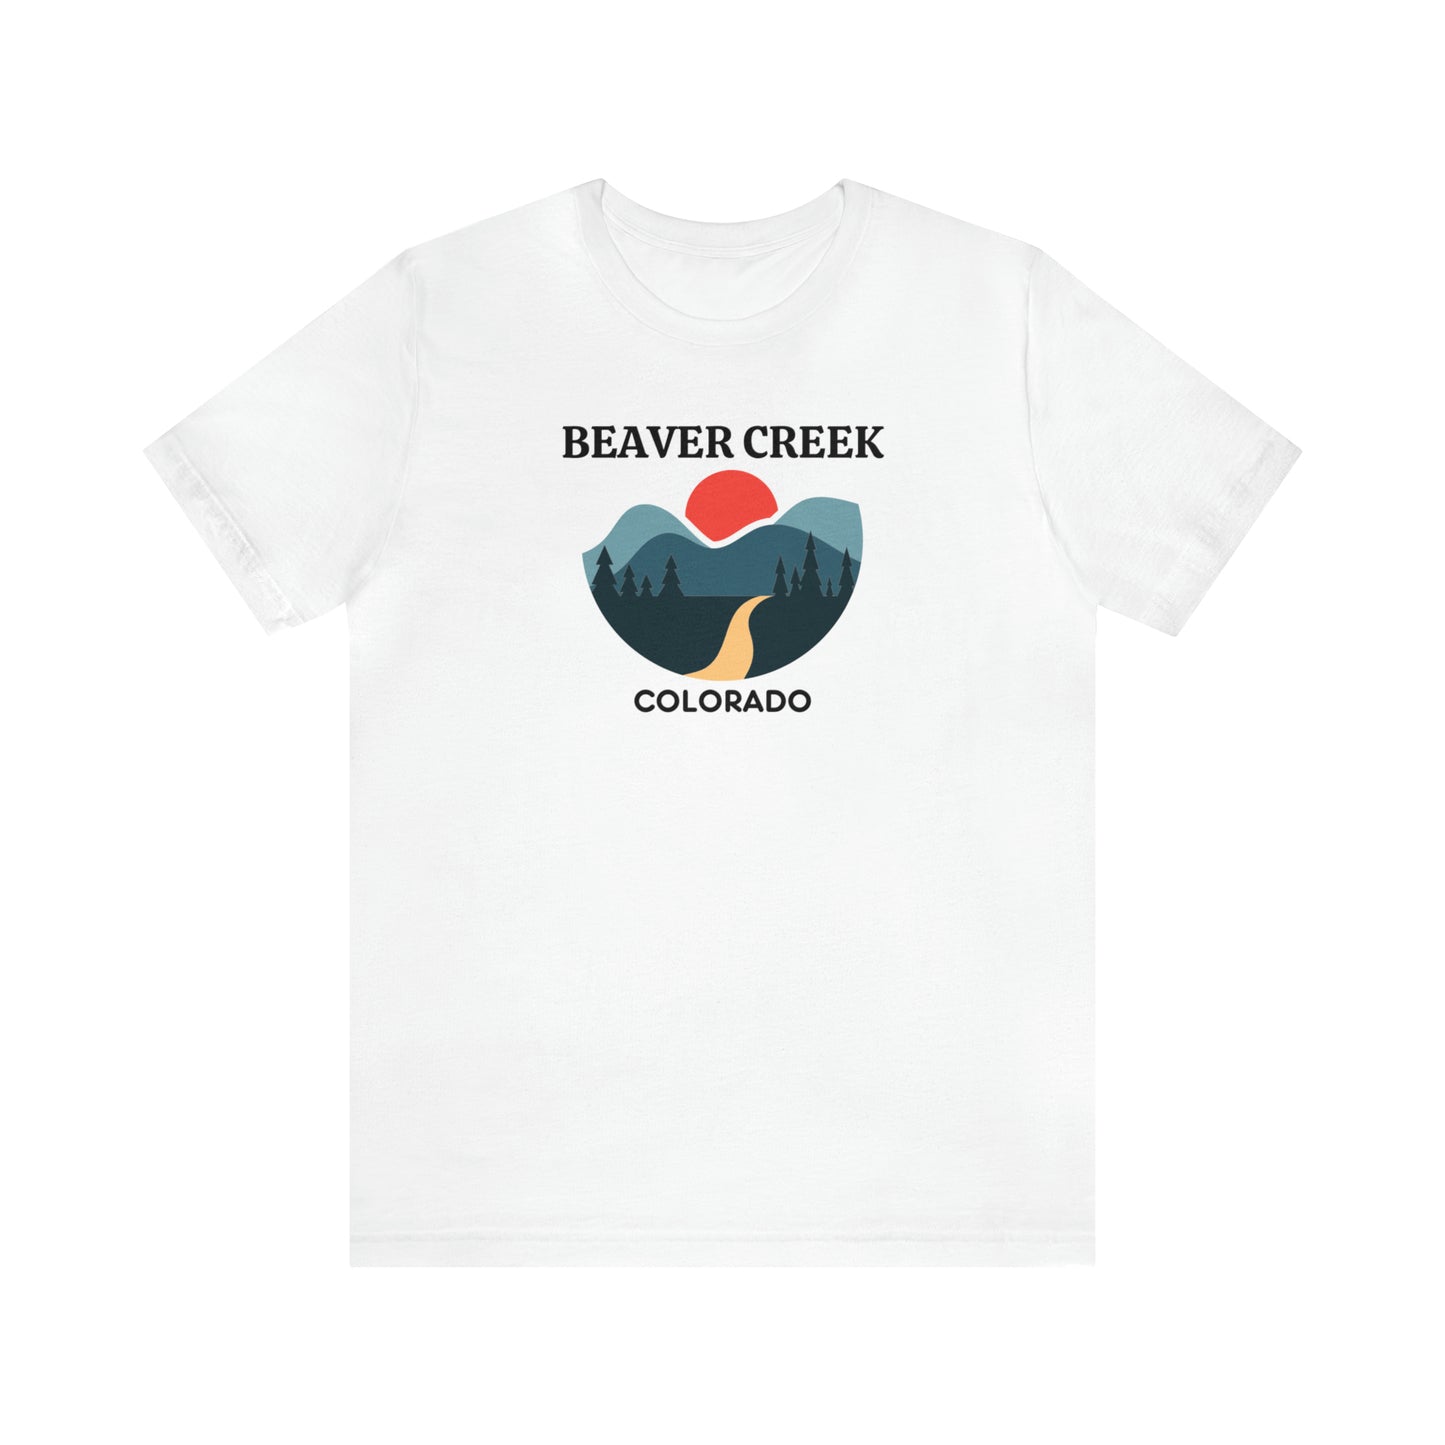 Beaver Creek Men's T-Shirt